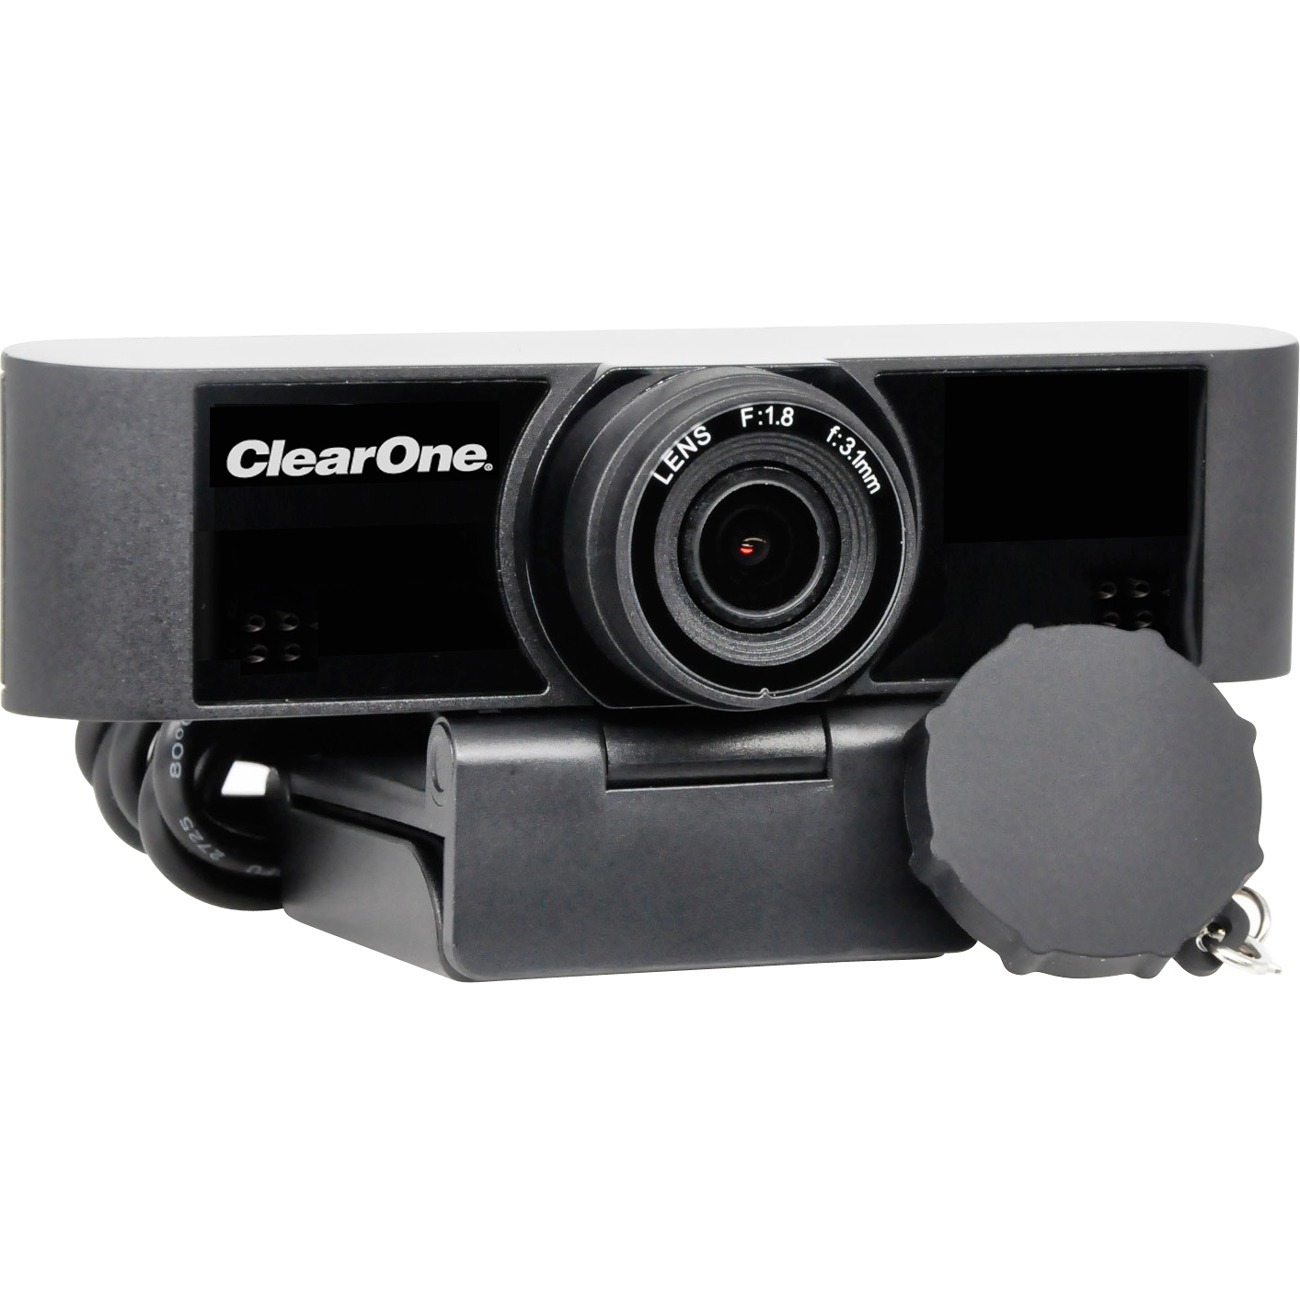 Вебкамера ClearOne UNITE 20 Pro, 2.1 MP, 1920x1080, USB 2.0, черный (910-2100-020)